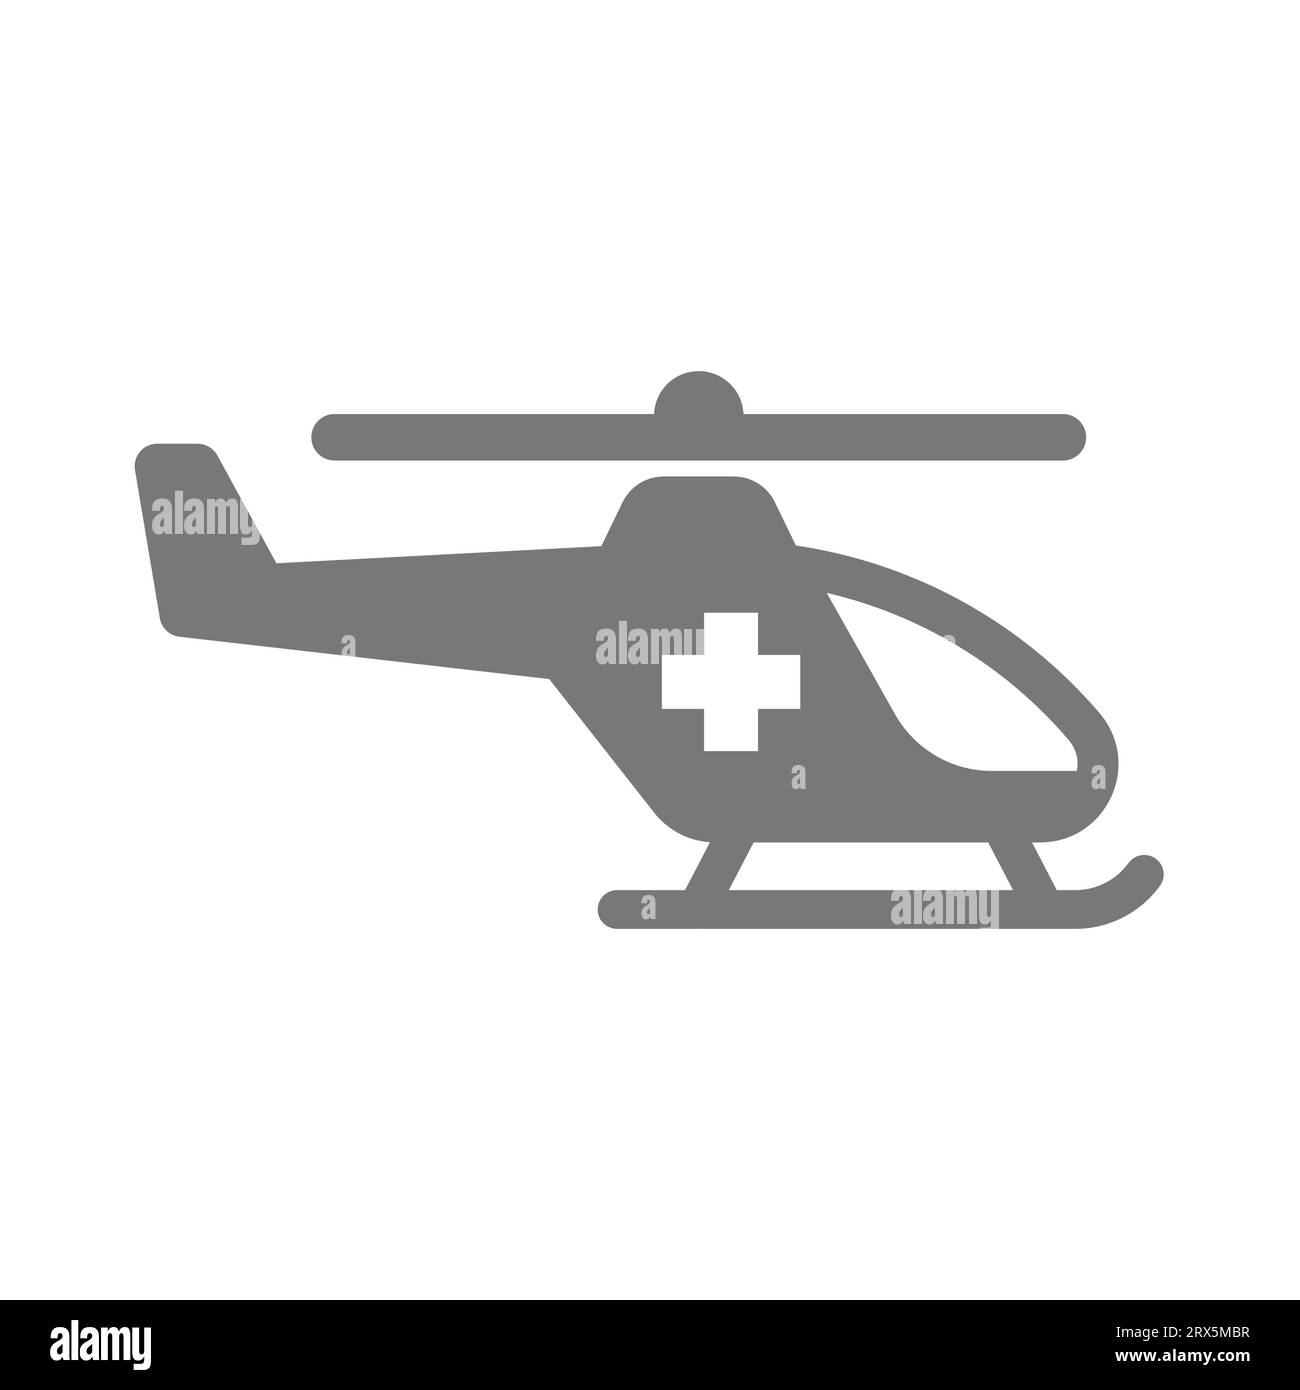 Vektorsymbol für medizinische Hilfe in der Luft. Helikopter, Notfallsymbol. Stock Vektor